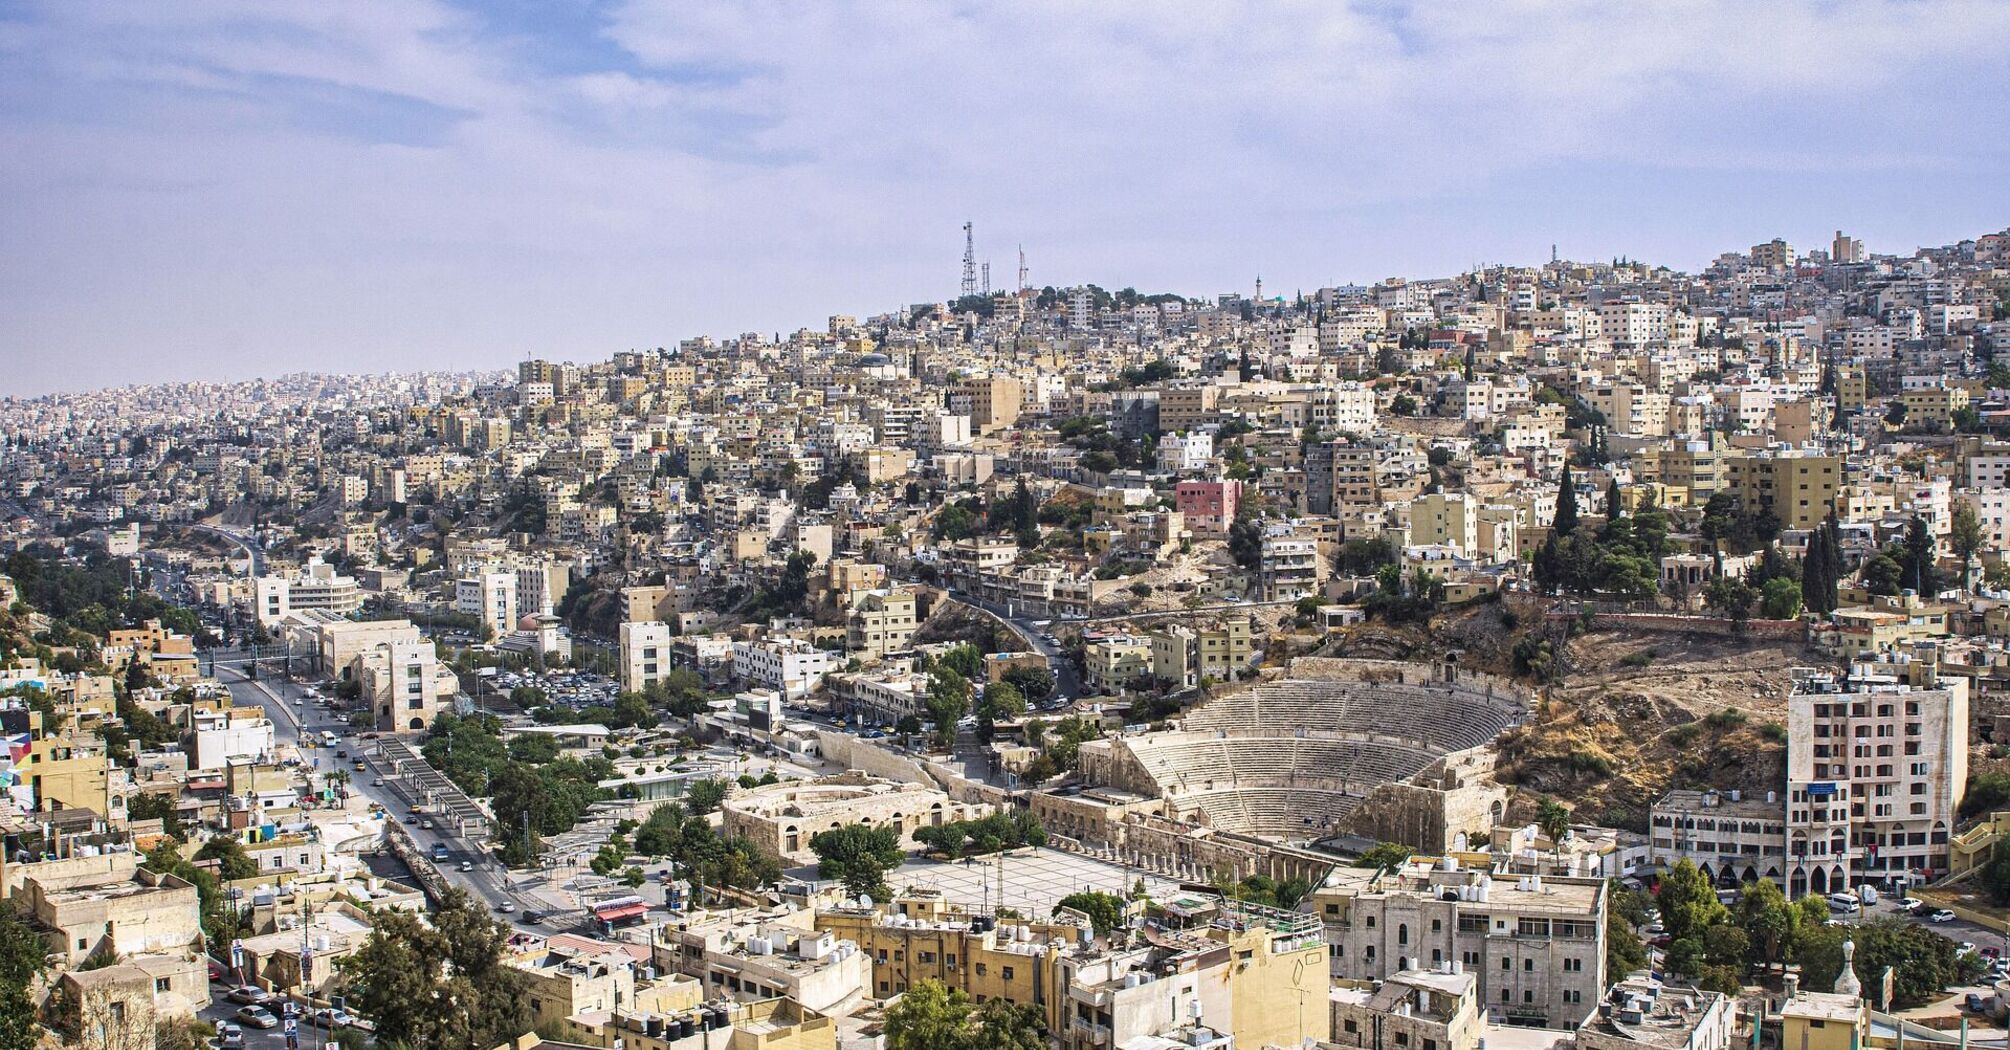 Cityscape of Amman, Jordan with buildings